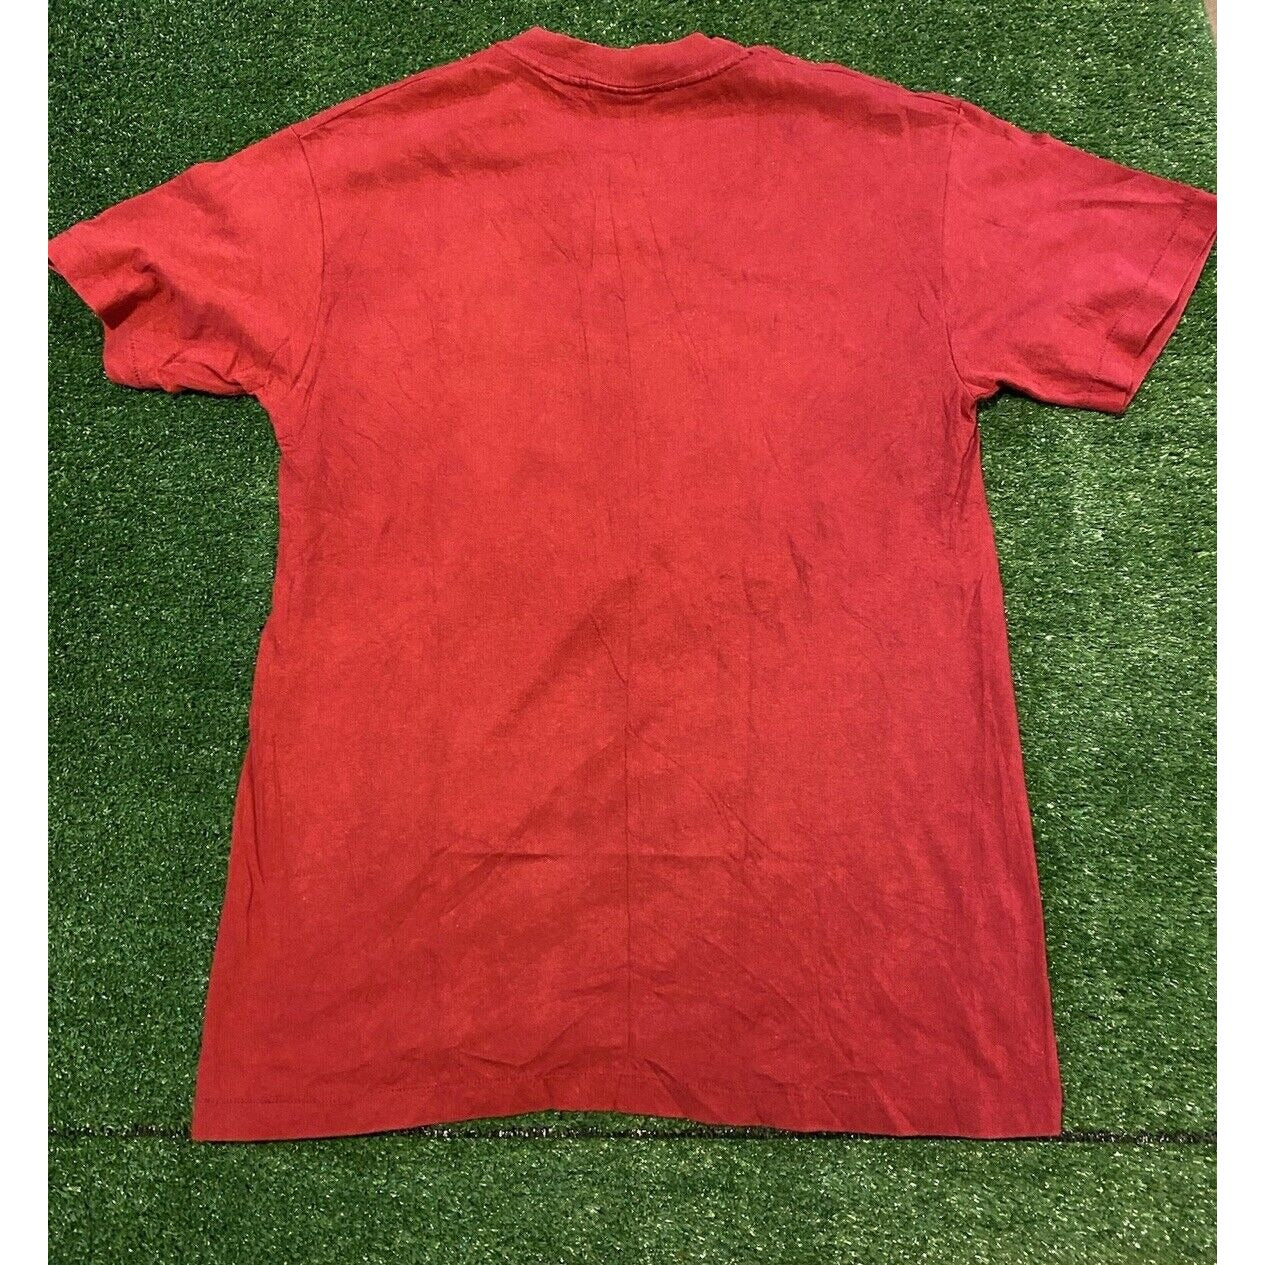 Vintage Washington Redskins shirt medium mens adult 90s red football Commanders